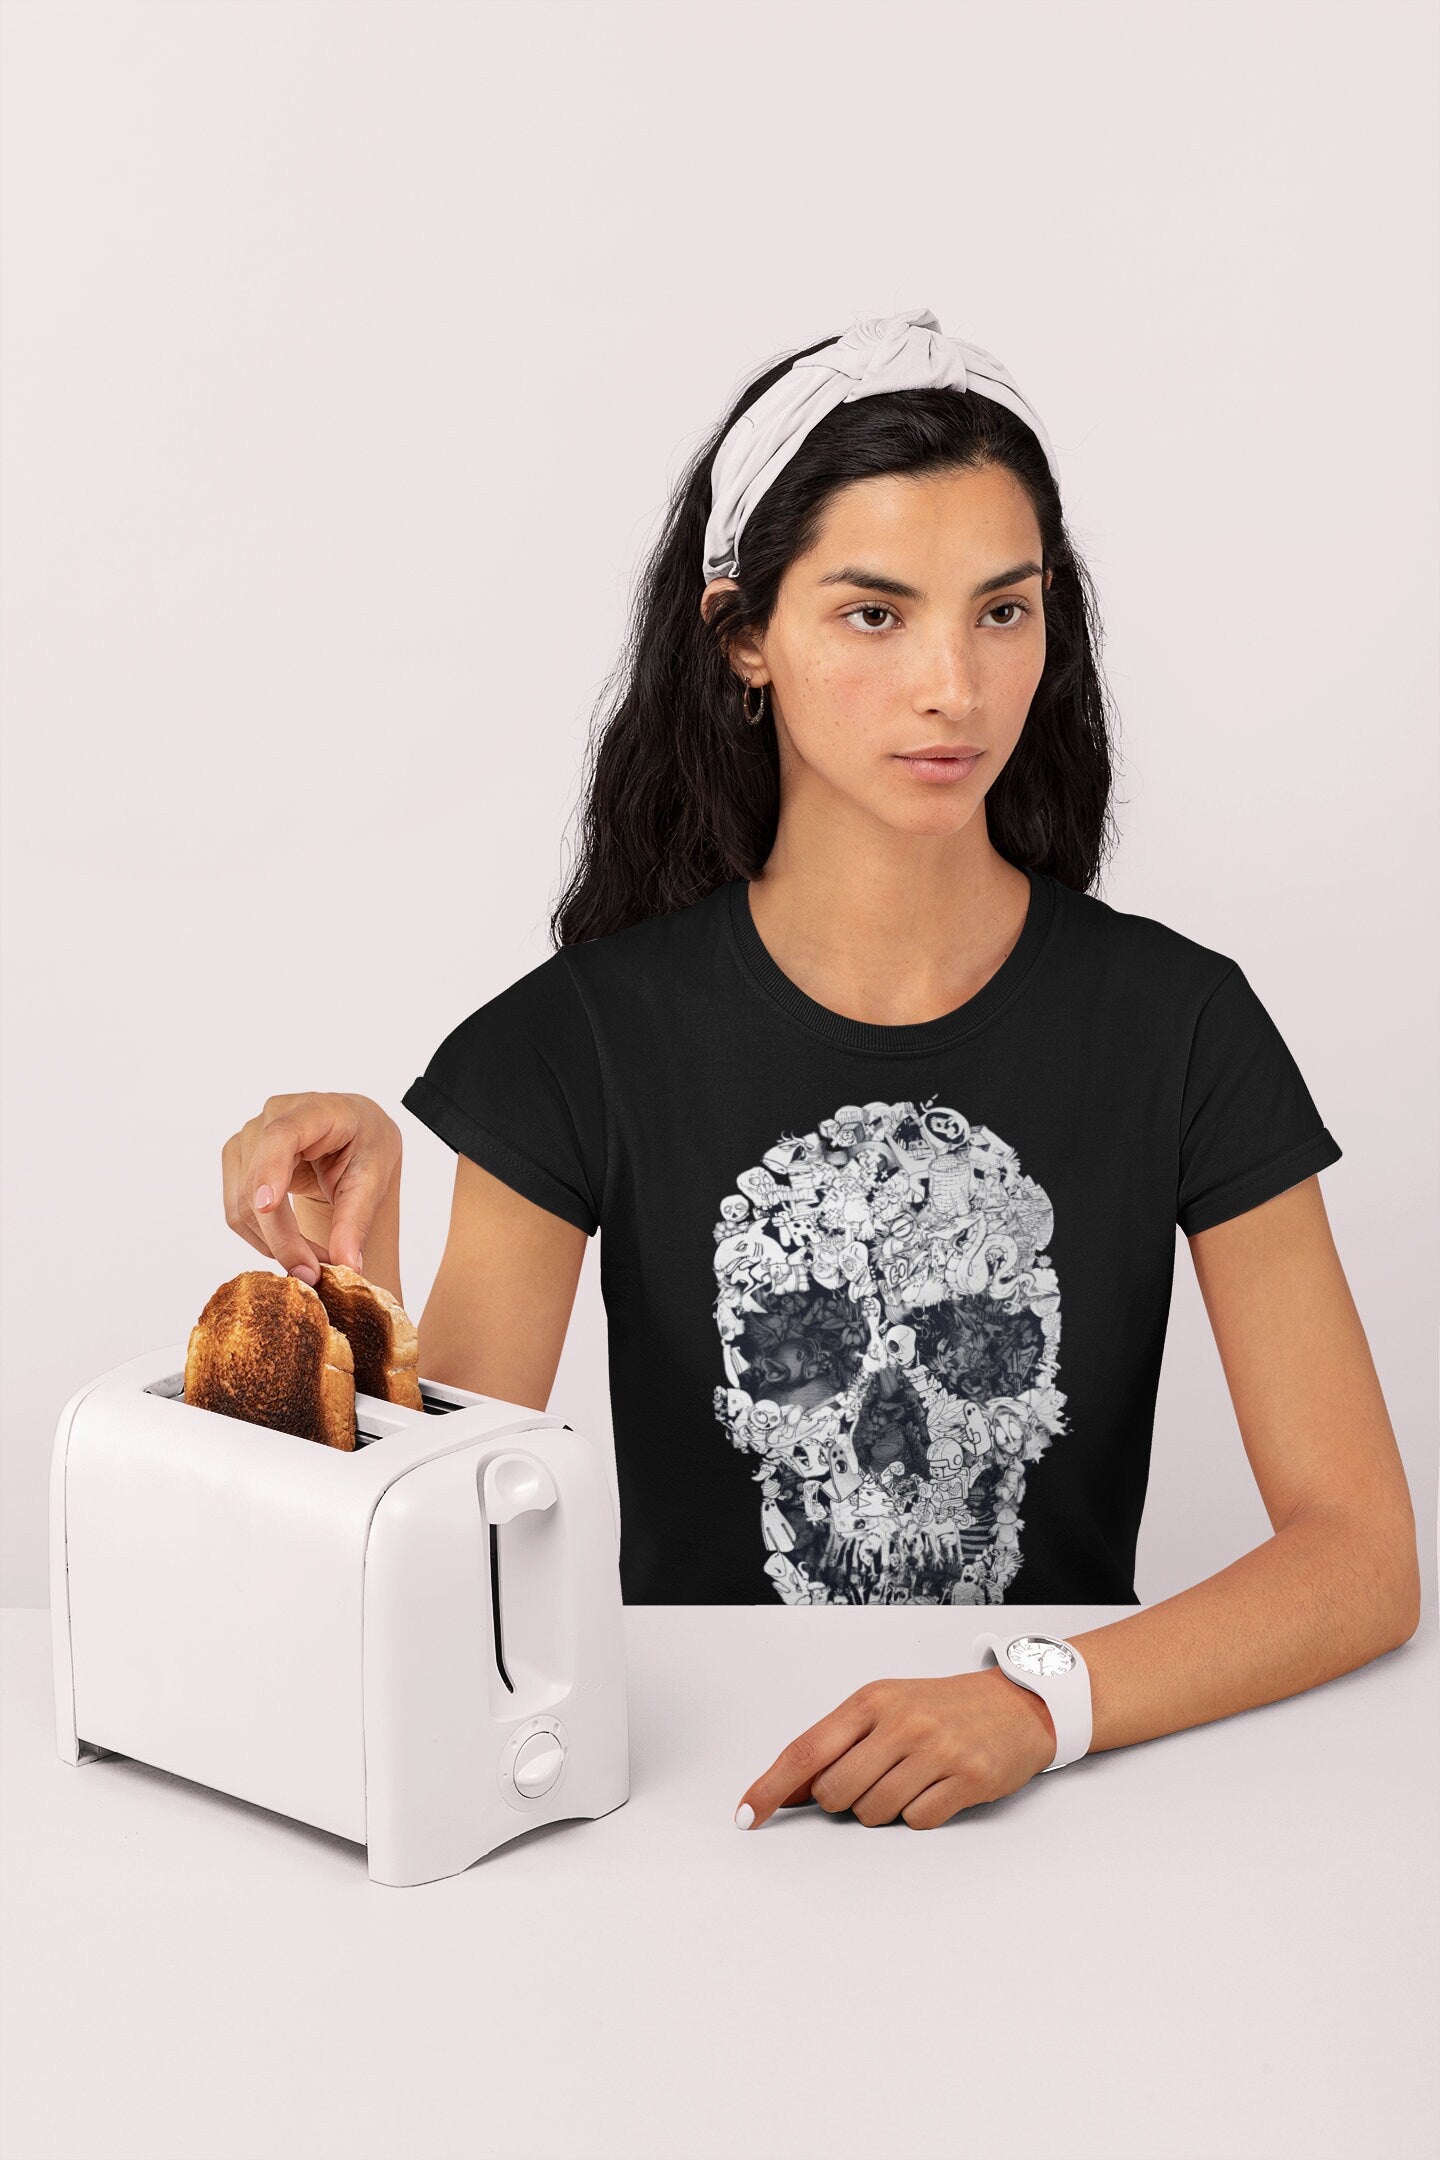 Womens Skull T shirt, Sugar Skull Print Womens T-Shirt, Gothic Skull Shirt Gift For Her, Halloween Style TShirt Gift, Bella Canvas T-Shirt